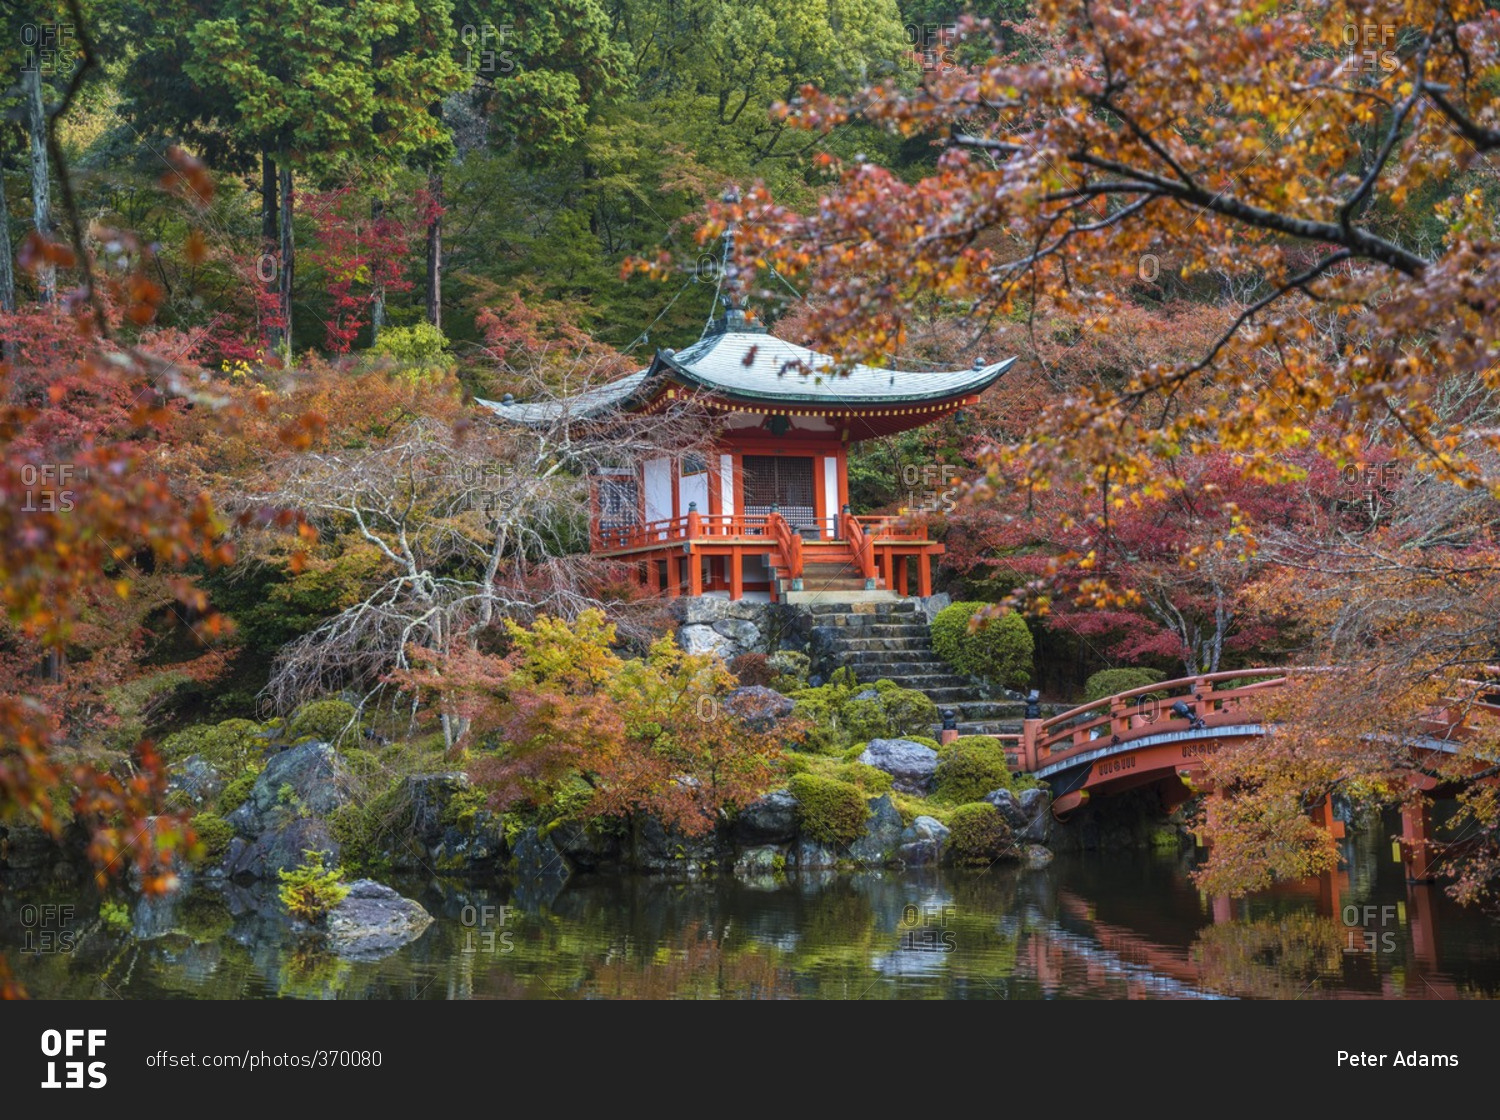 Bentendo Temple located within the Daigo-ji temple area, Kyoto, Japan